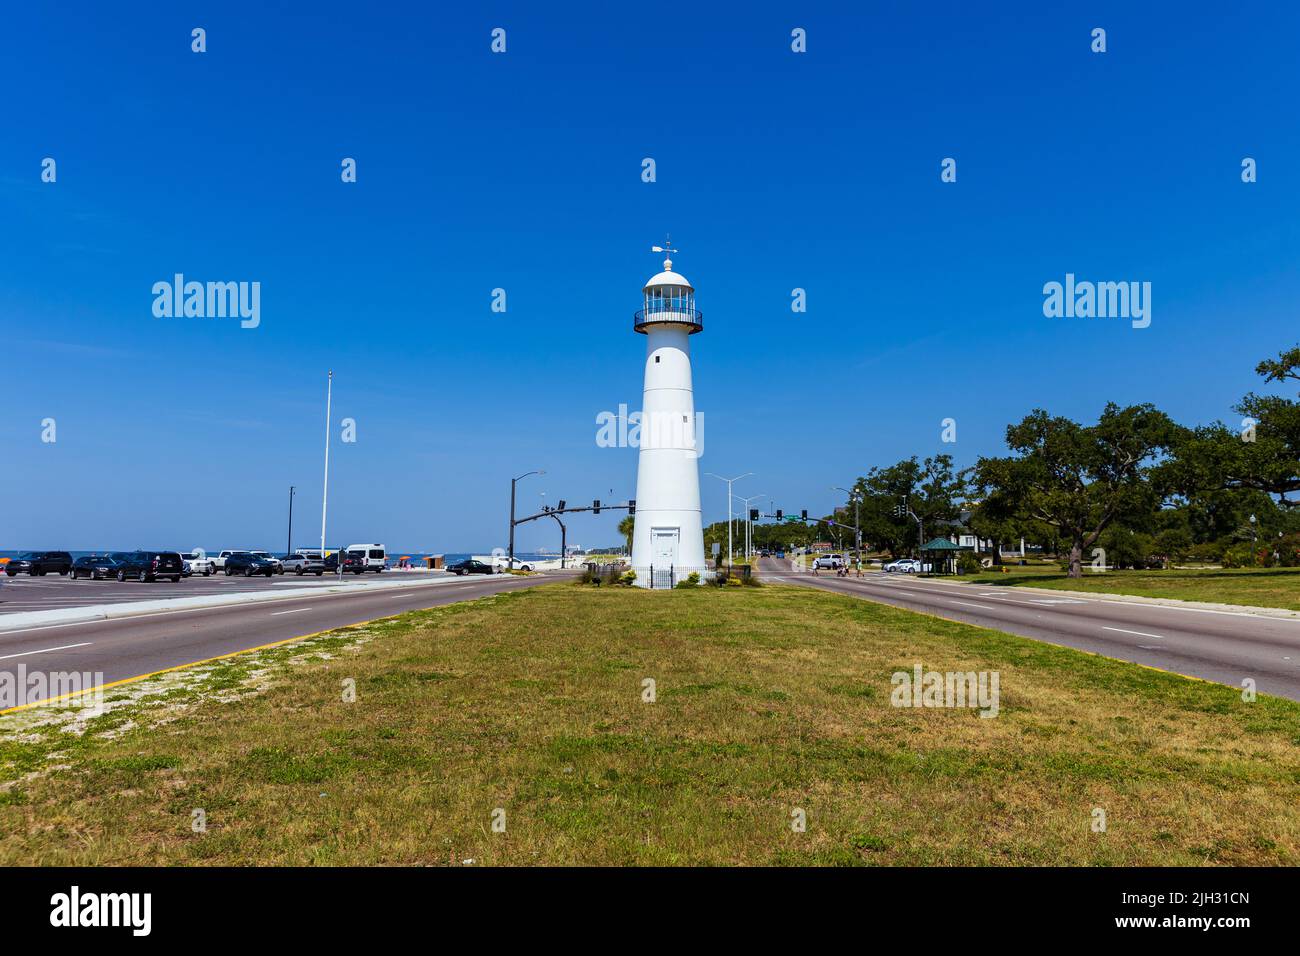 Biloxi, MS - June 18, 2022: The Biloxi Lighthouse, built in 1848. Stock Photo